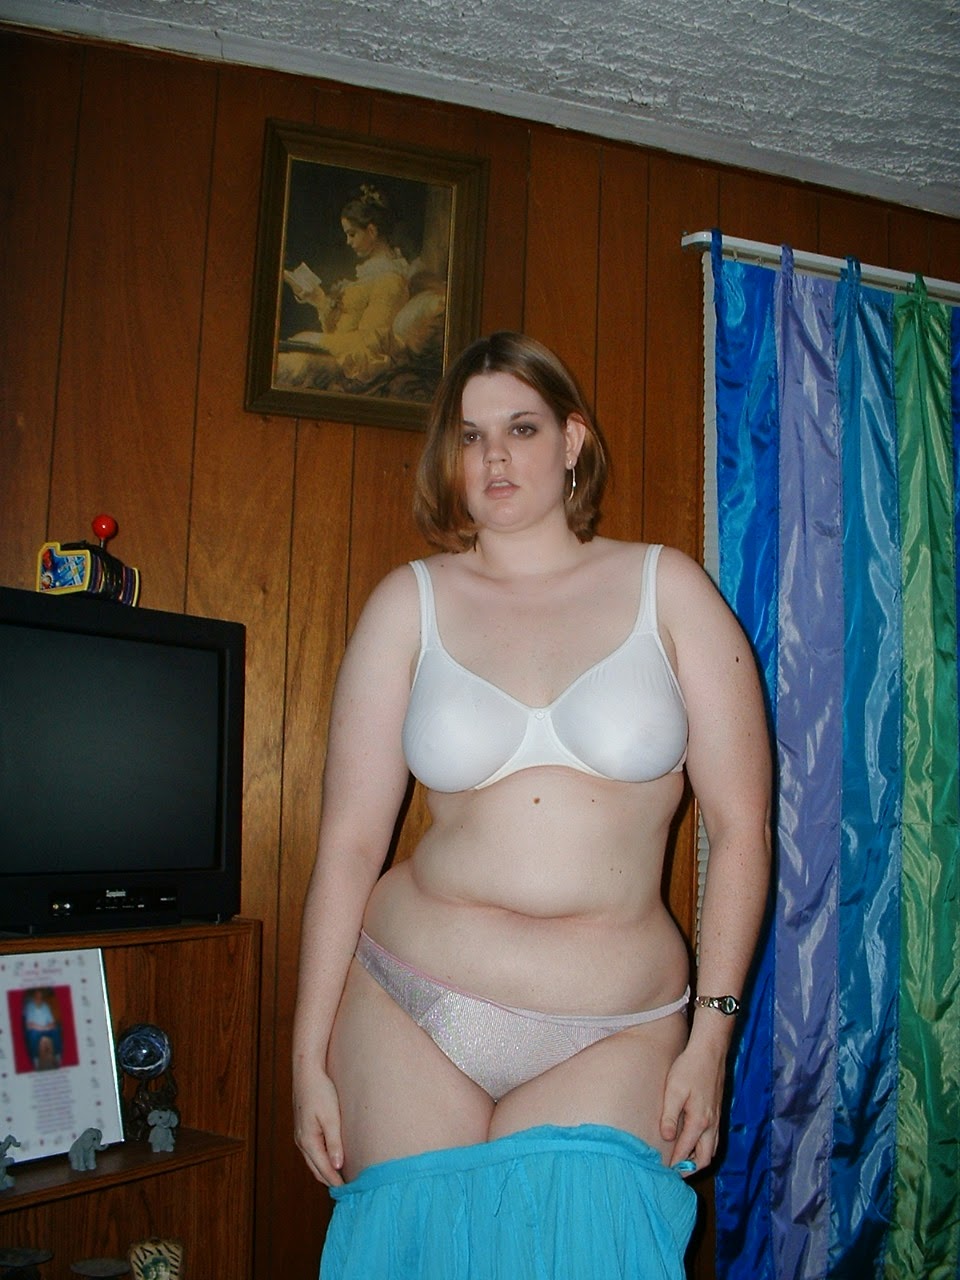 biack fat girls nude in public nude gallery pic